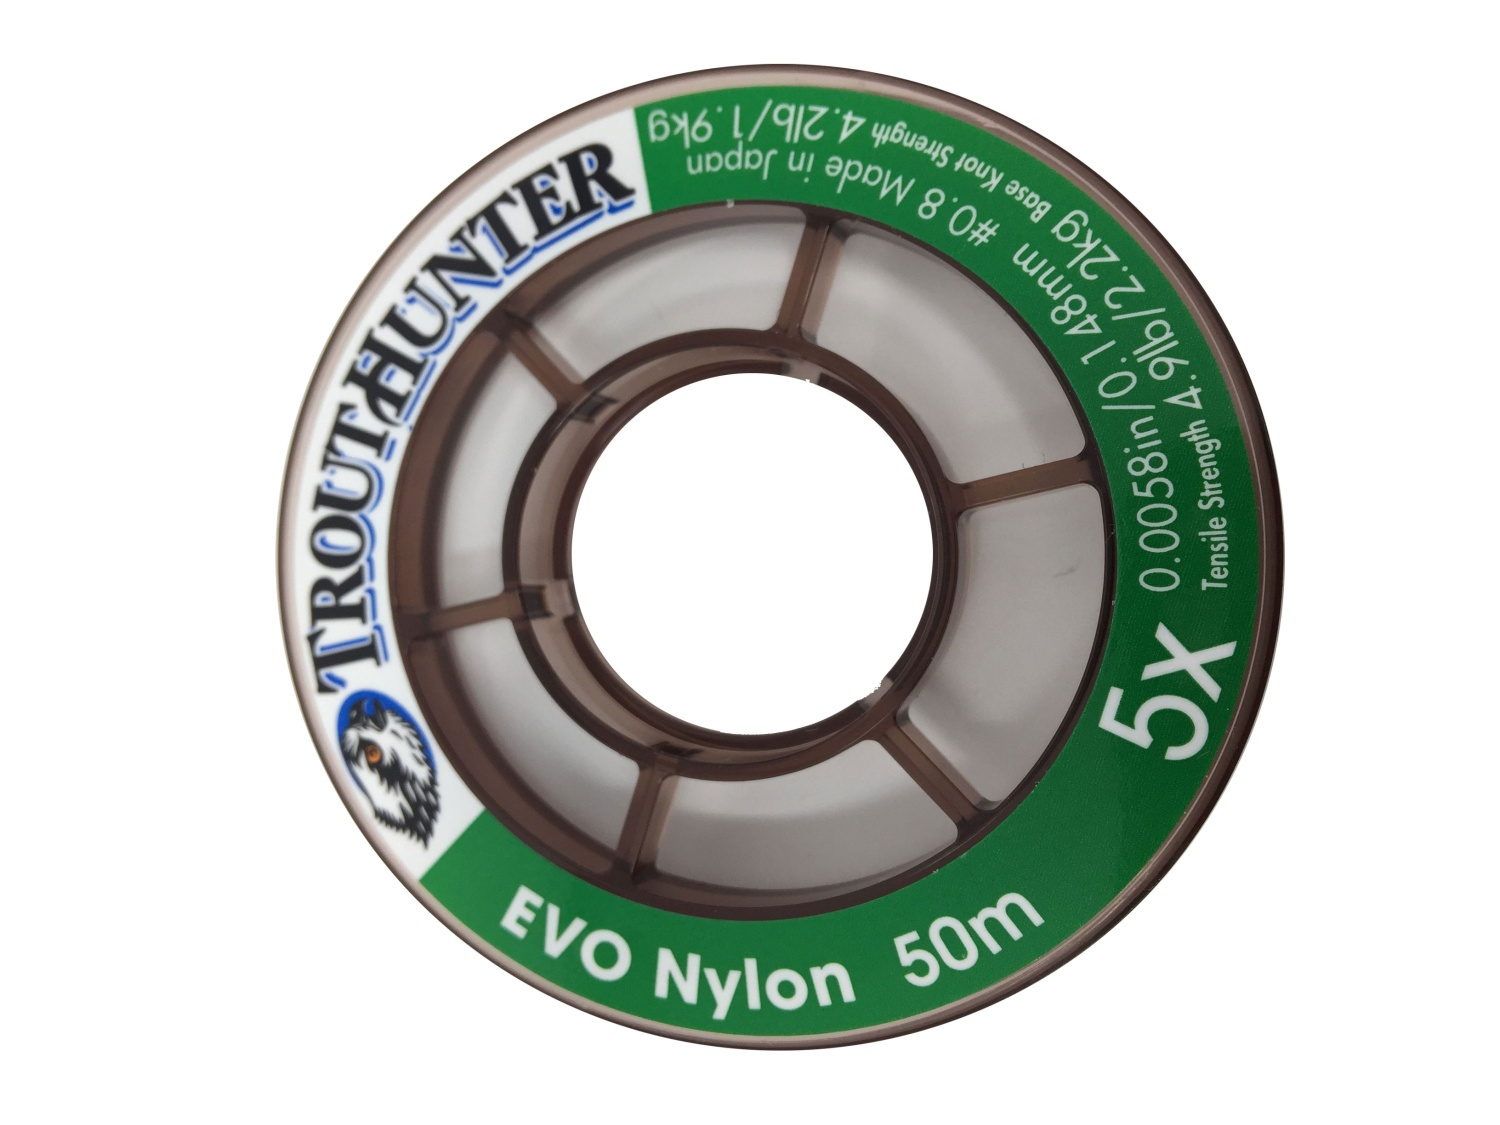 Trout Hunter Nylon EVO Tafsmaterial - 7X - 0,104 mm